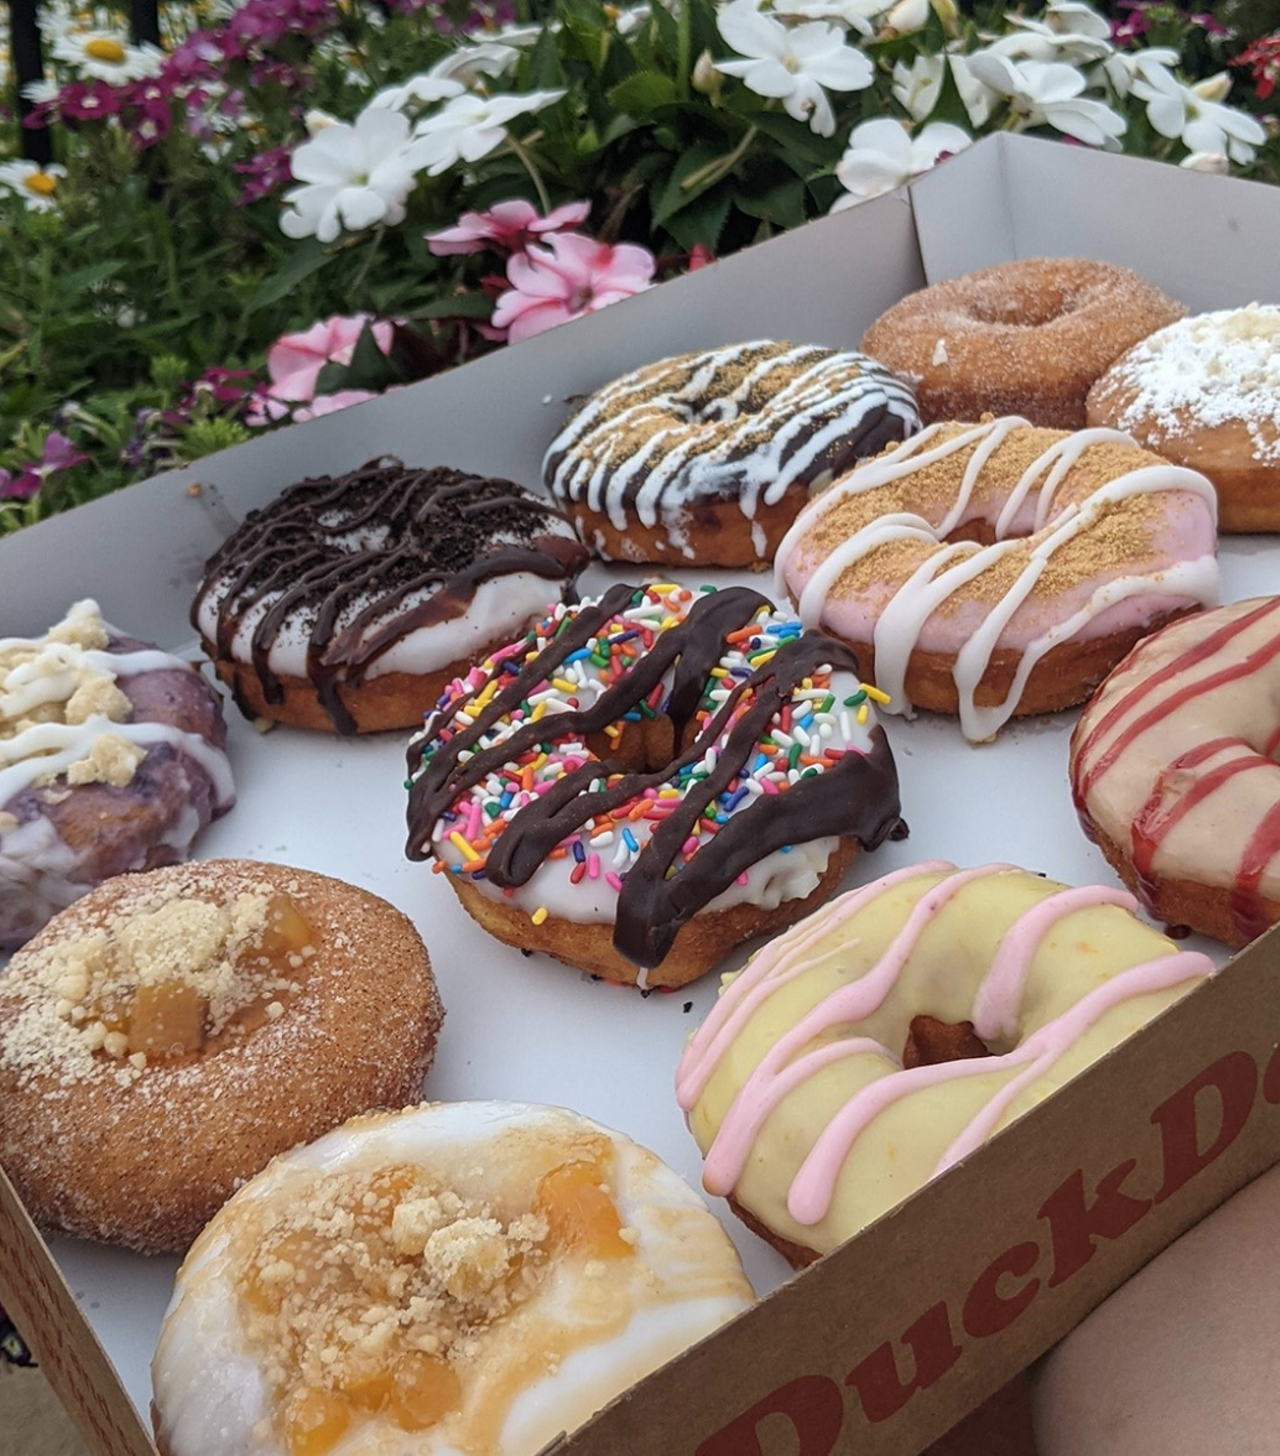 Best Donut Shop
Duck Donuts, Multiple locations, duckdonuts.com
Photo via Instagram / duckdonuts